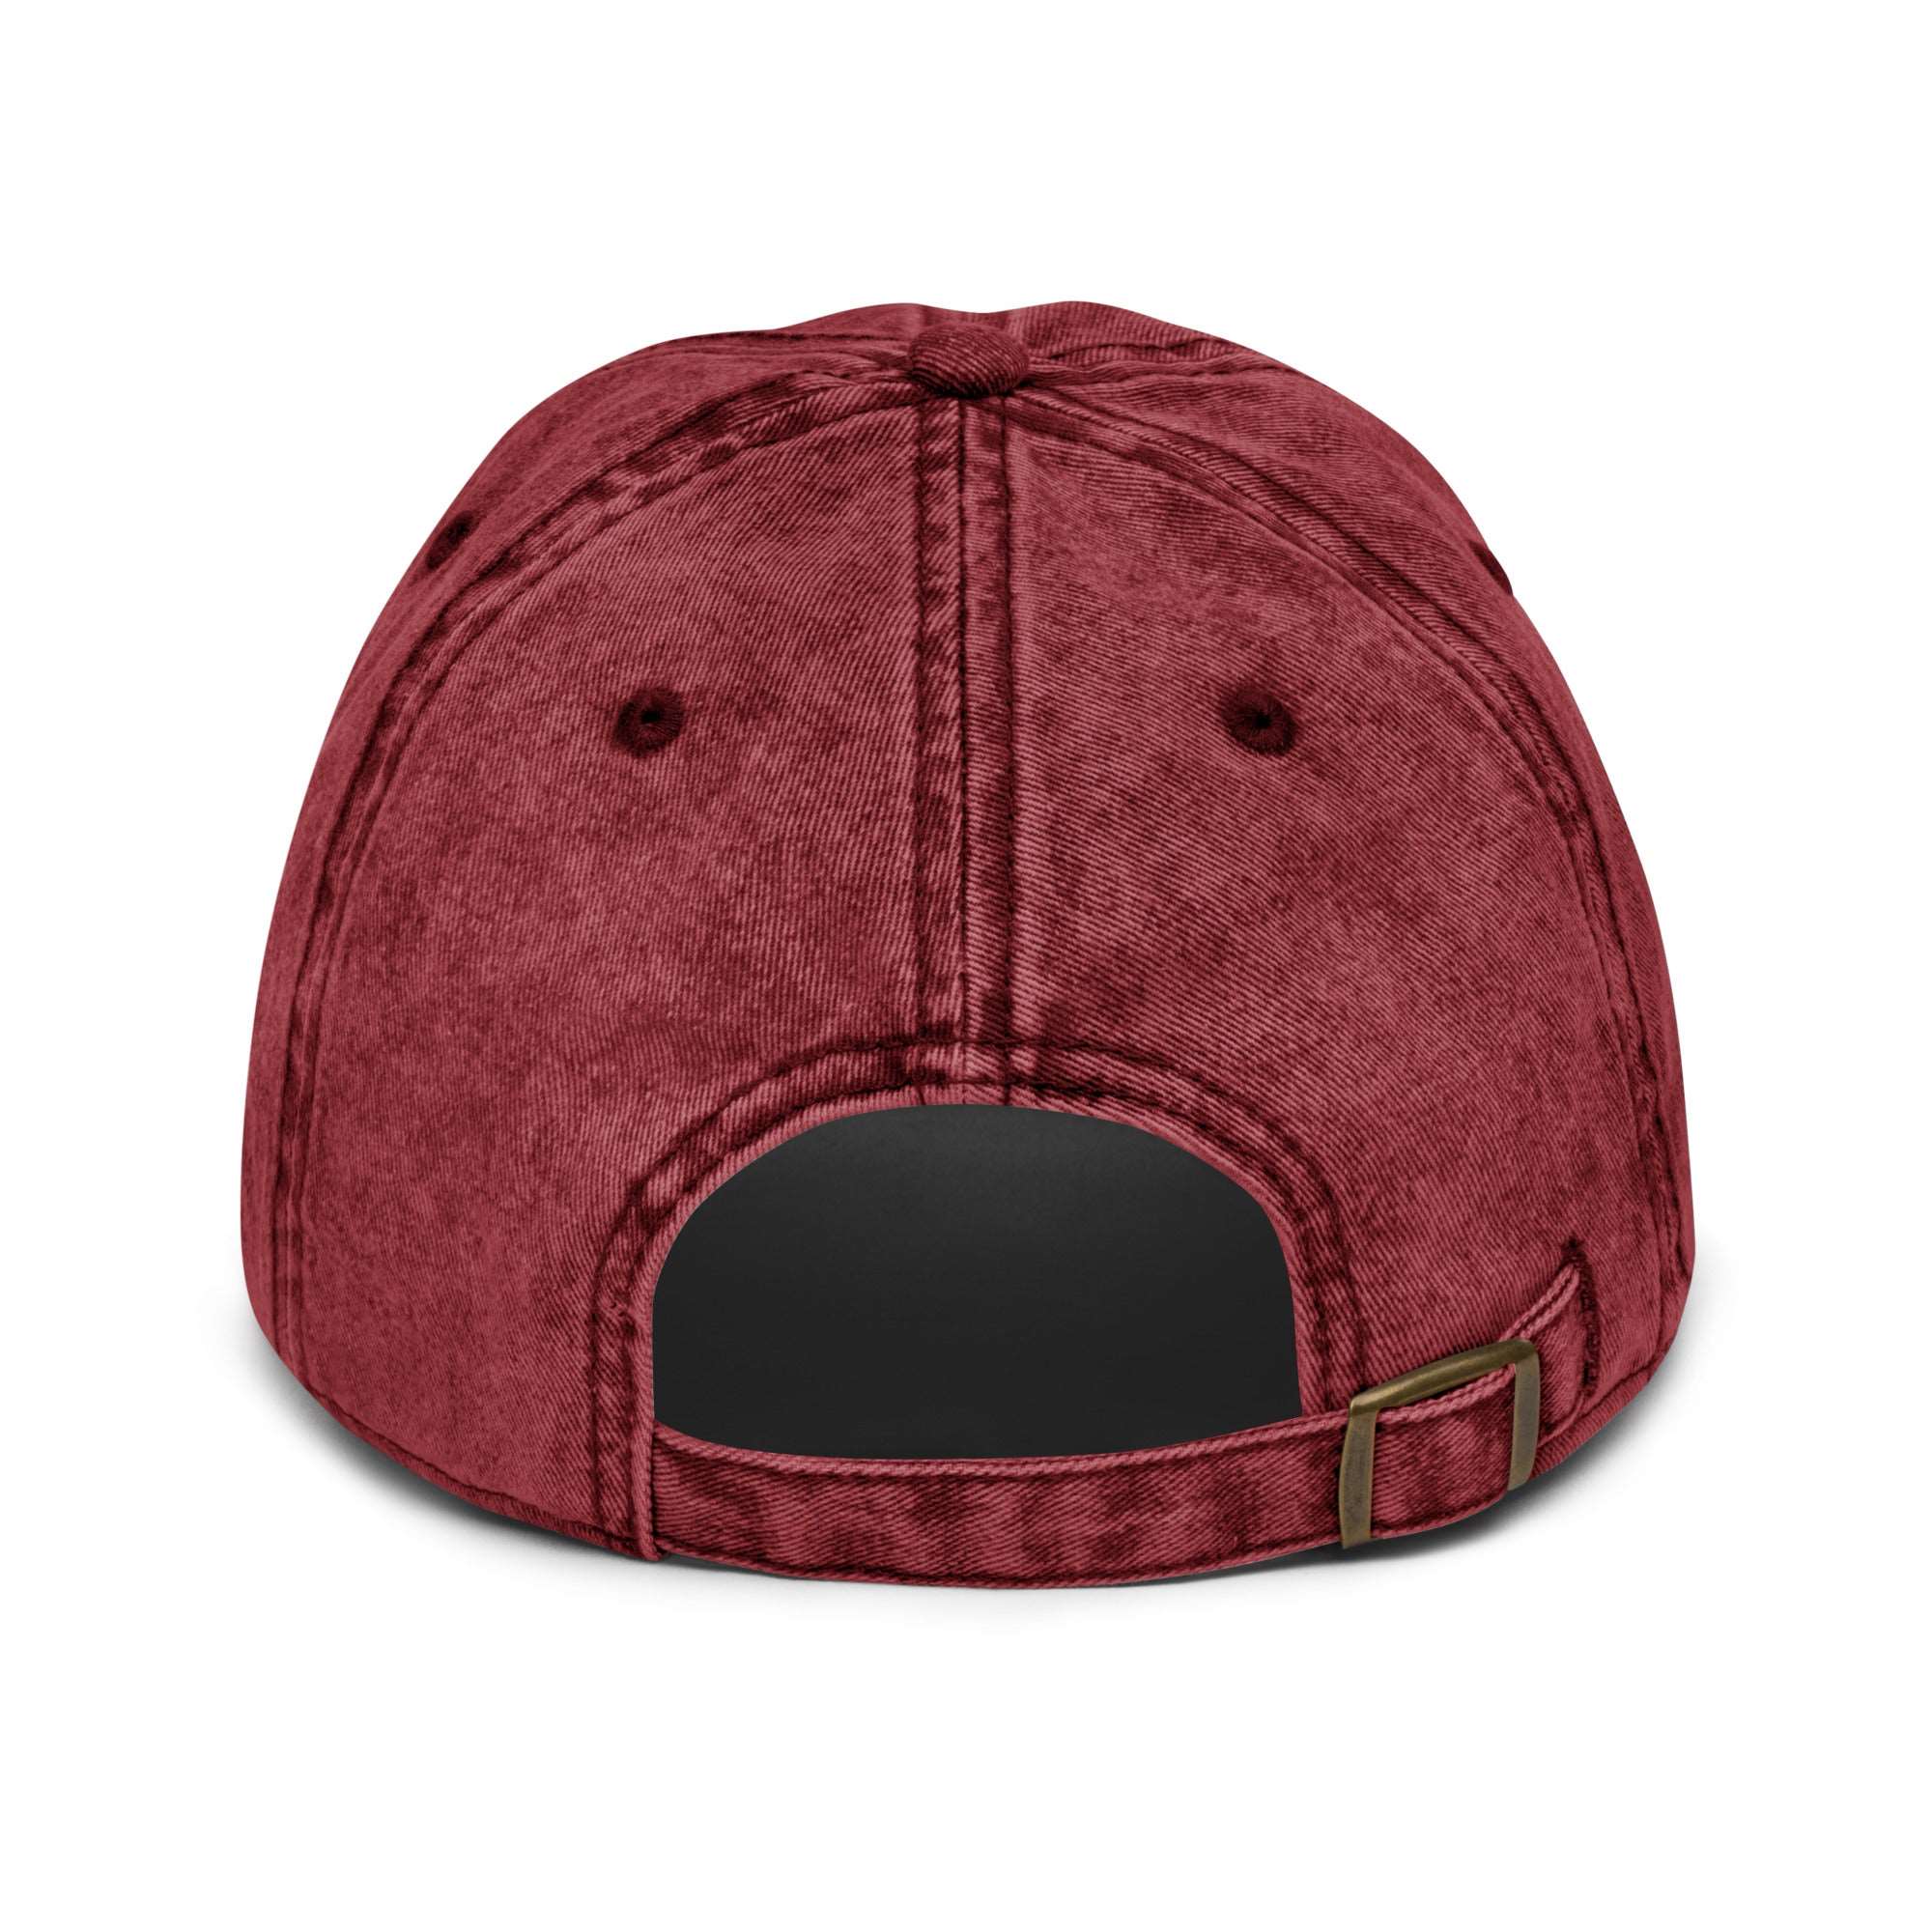 Negroni - Vintage Cap